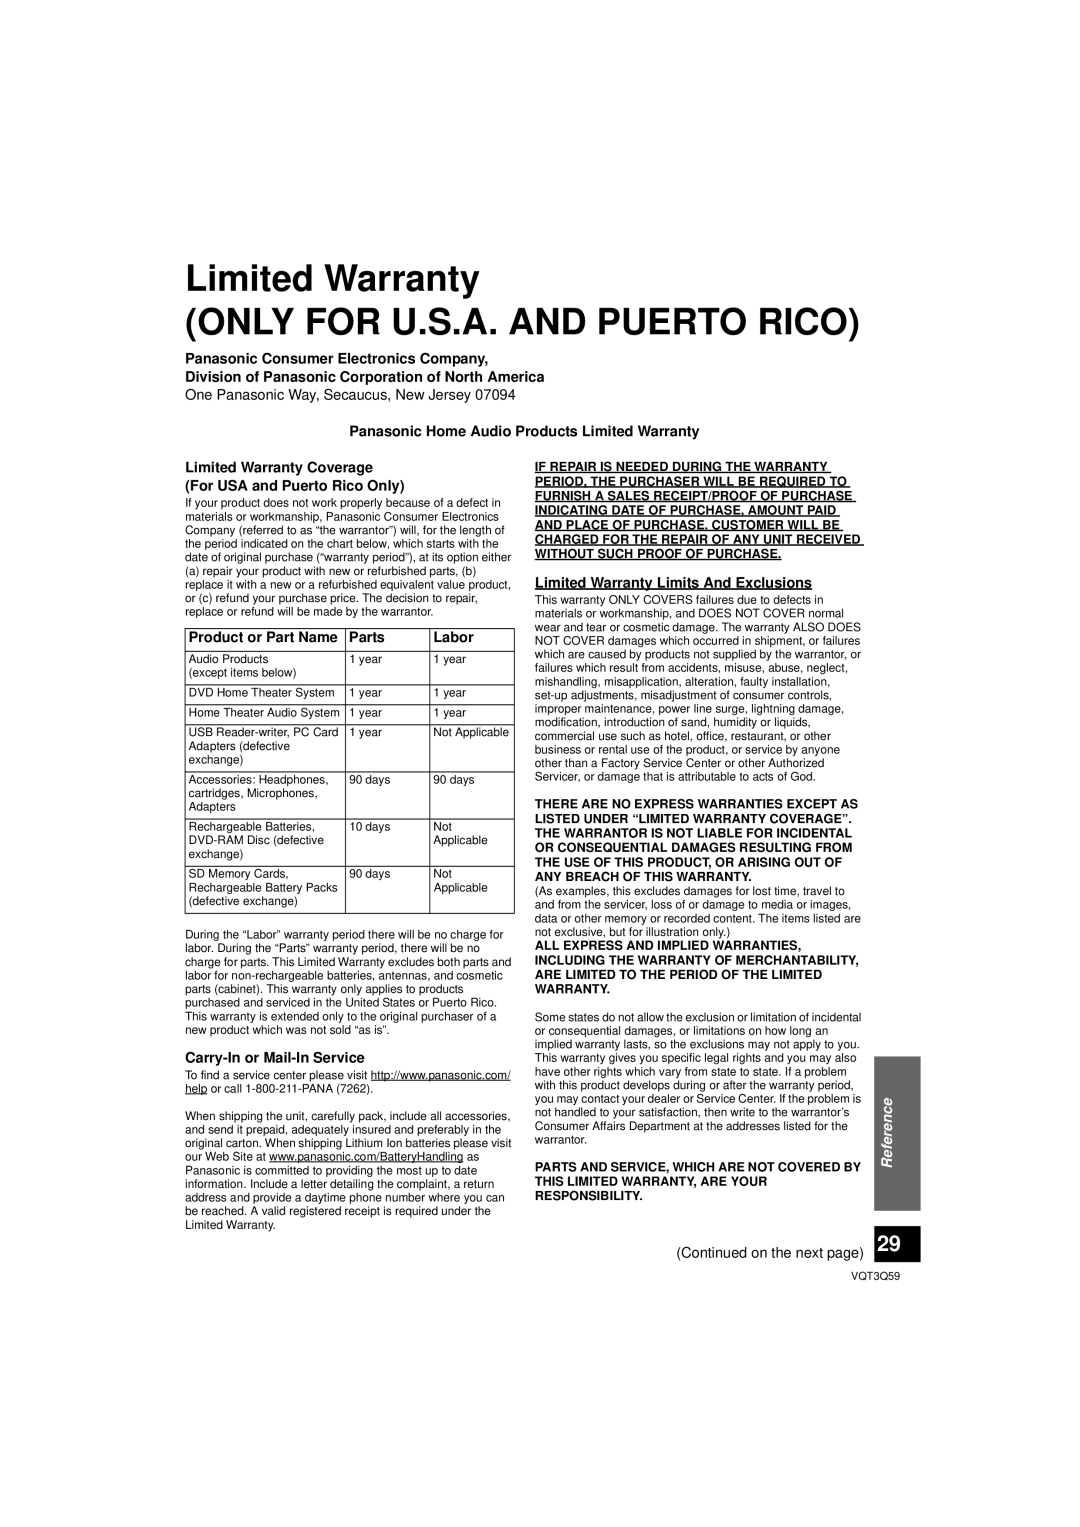 Panasonic SC-HTB15 Limited Warranty ONLY FOR U.S.A. AND PUERTO RICO, Panasonic Consumer Electronics Company, Parts, Labor 